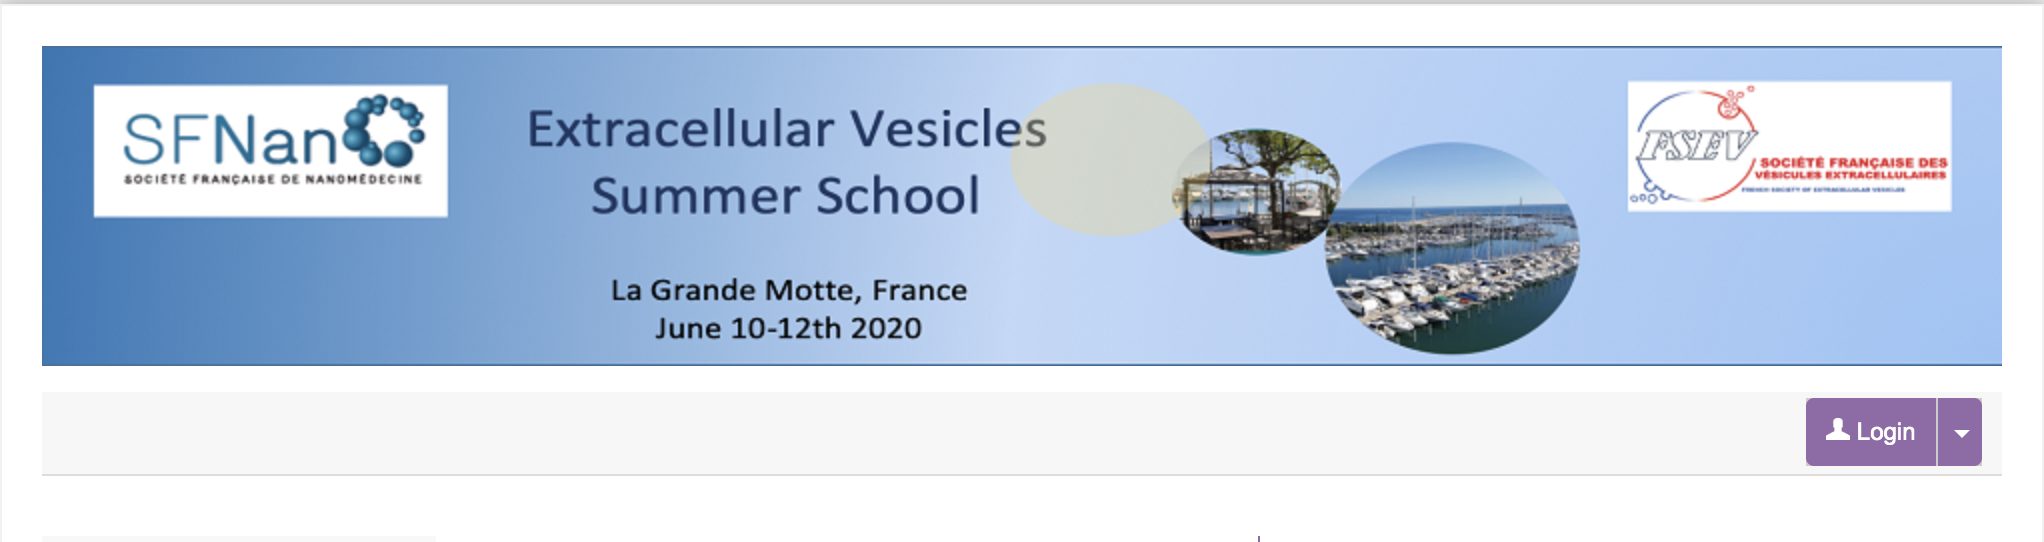 Extracellular vesicles summer school by SFNano & FSEV